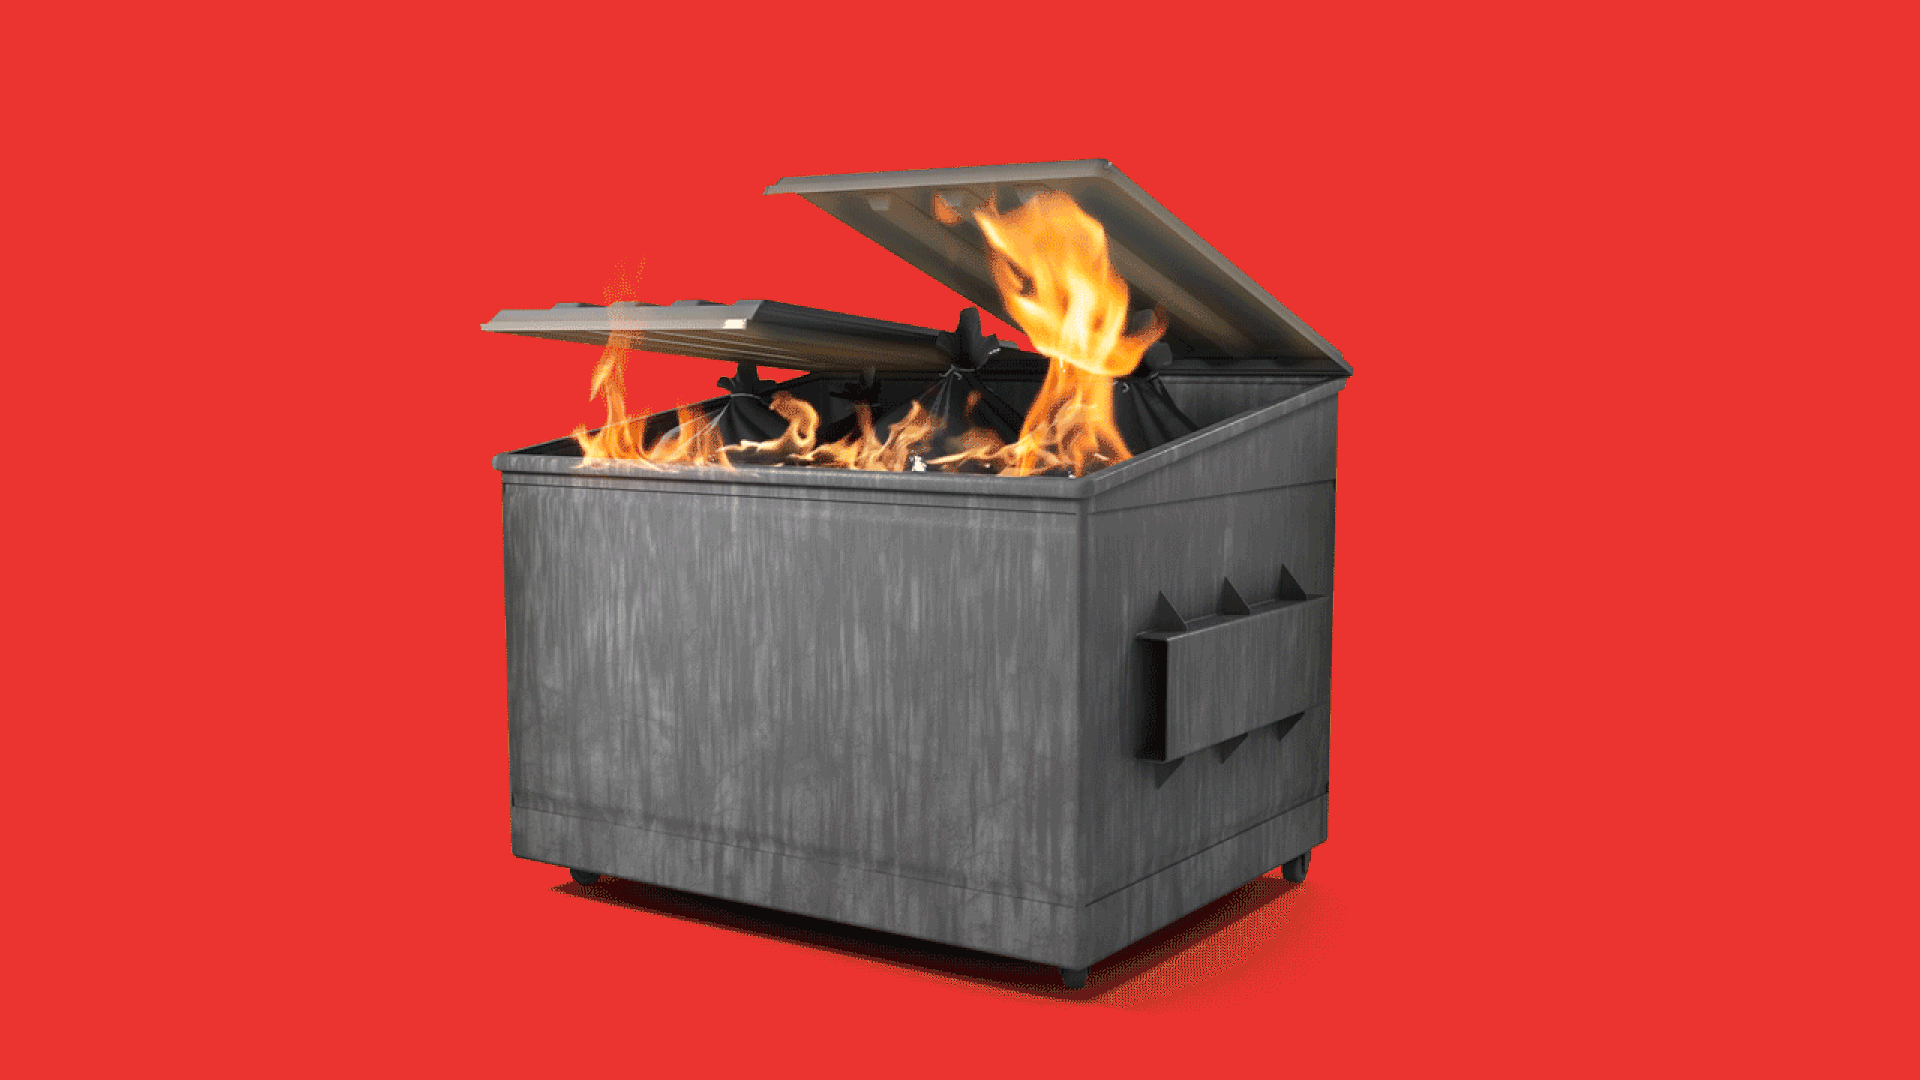 An animation of a dumpster fire